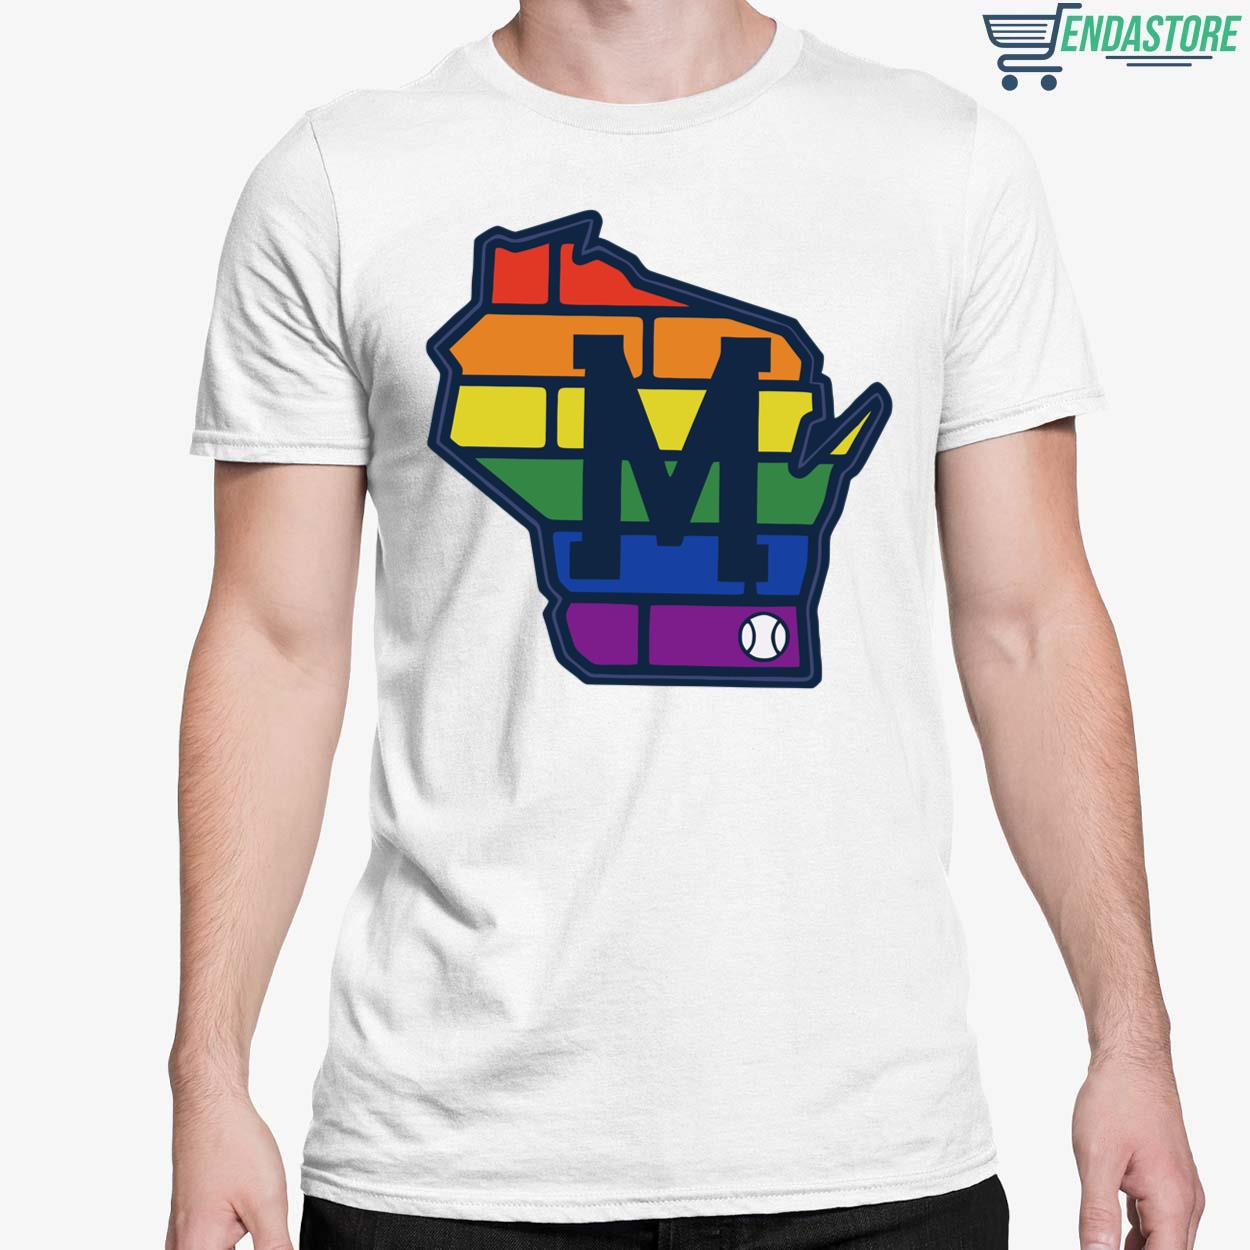 Endastore Milwaukee Brewers Pride T-Shirt